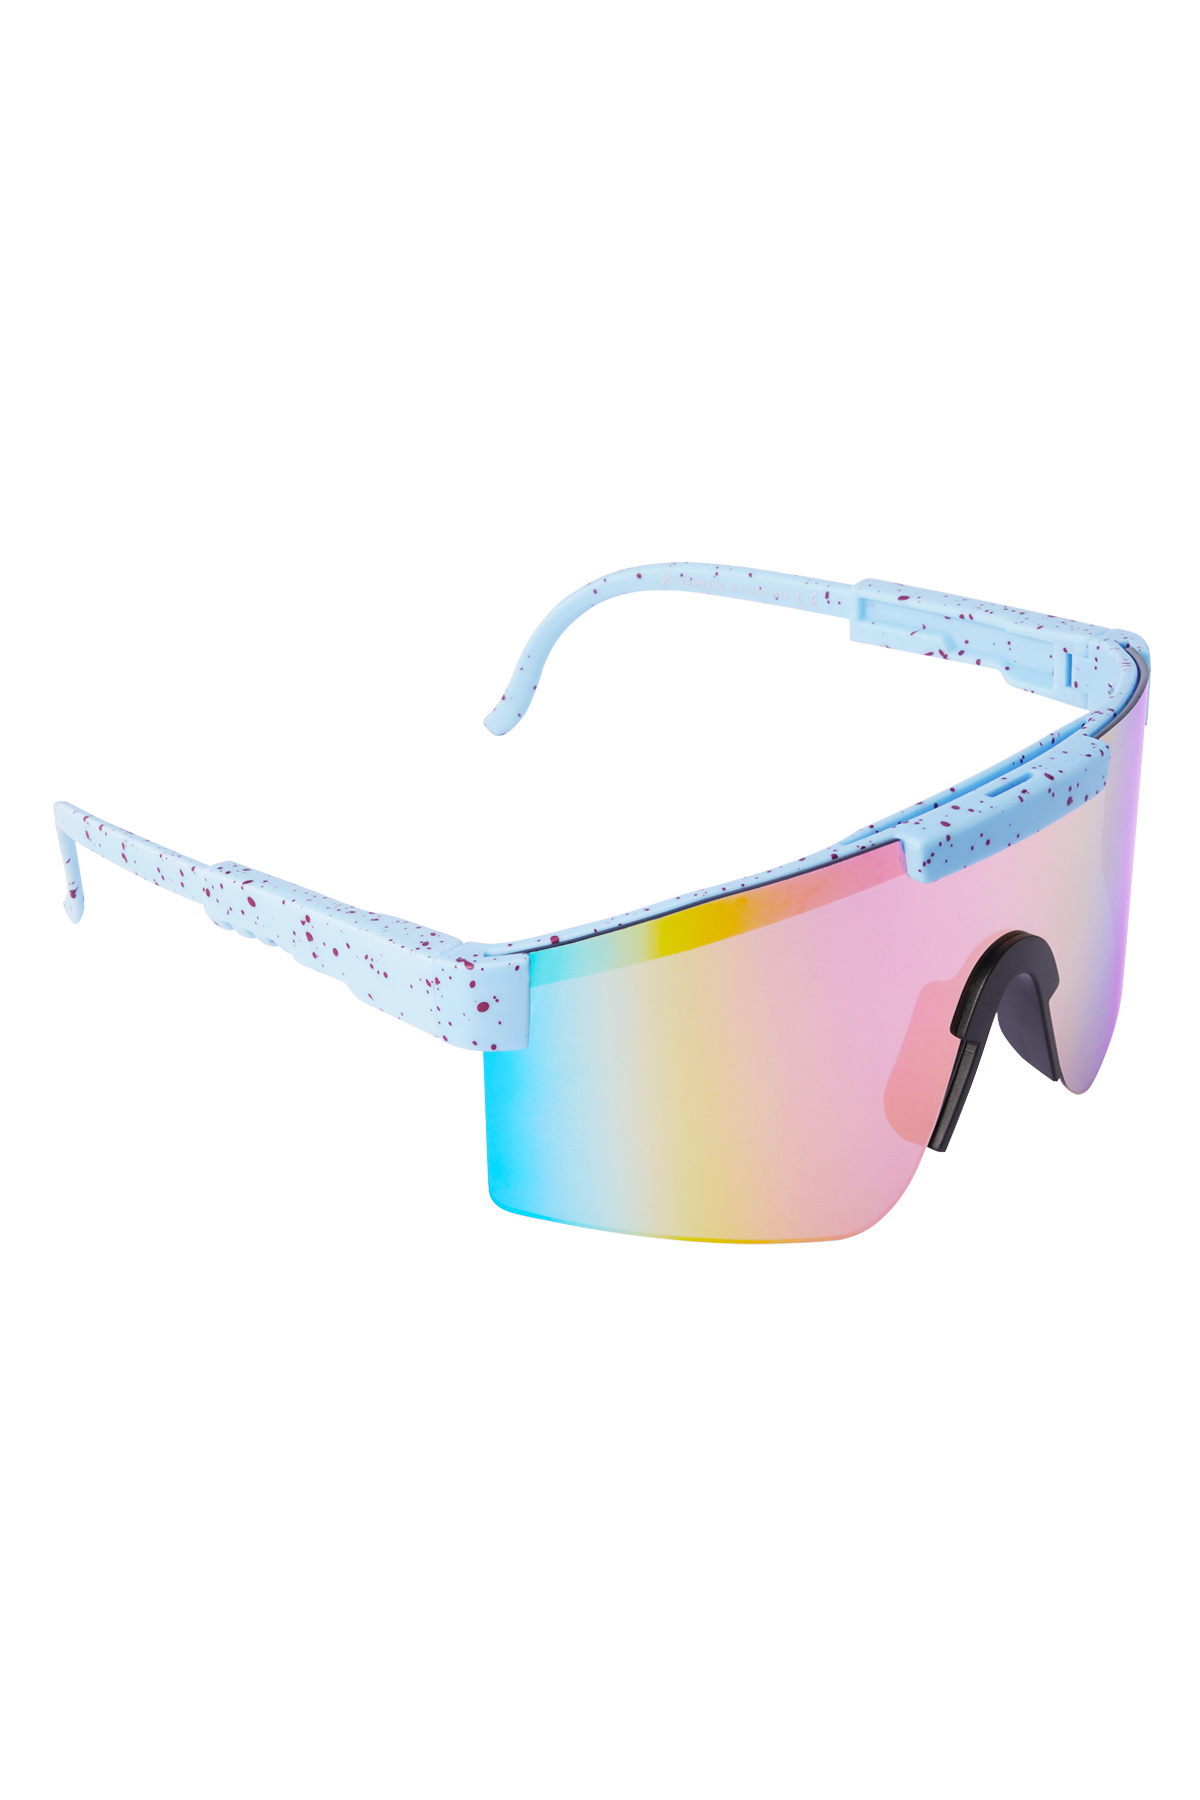 Sunglasses print colored lenses - blue